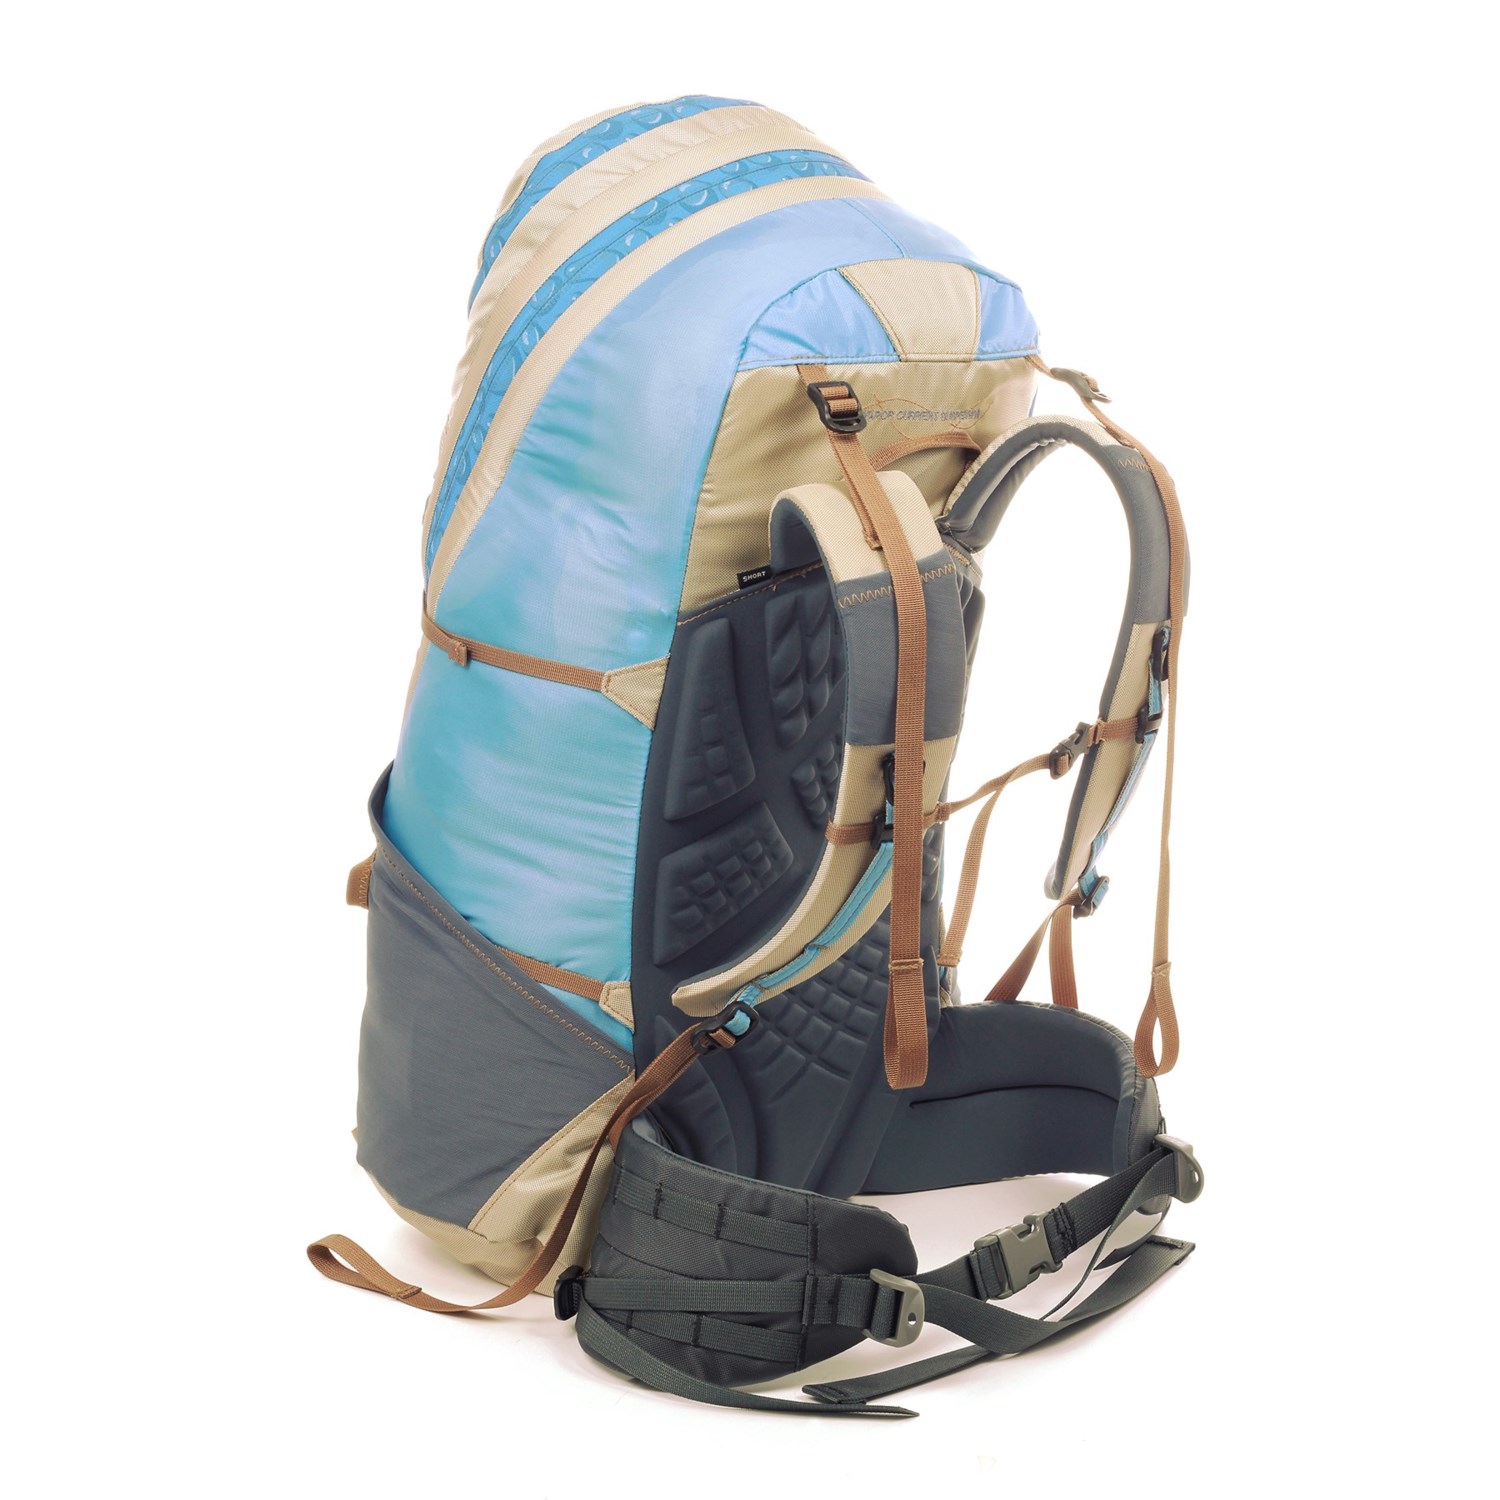 Granite Gear AJI 50 KI Backpack (For Women) 7444W - Save 26%